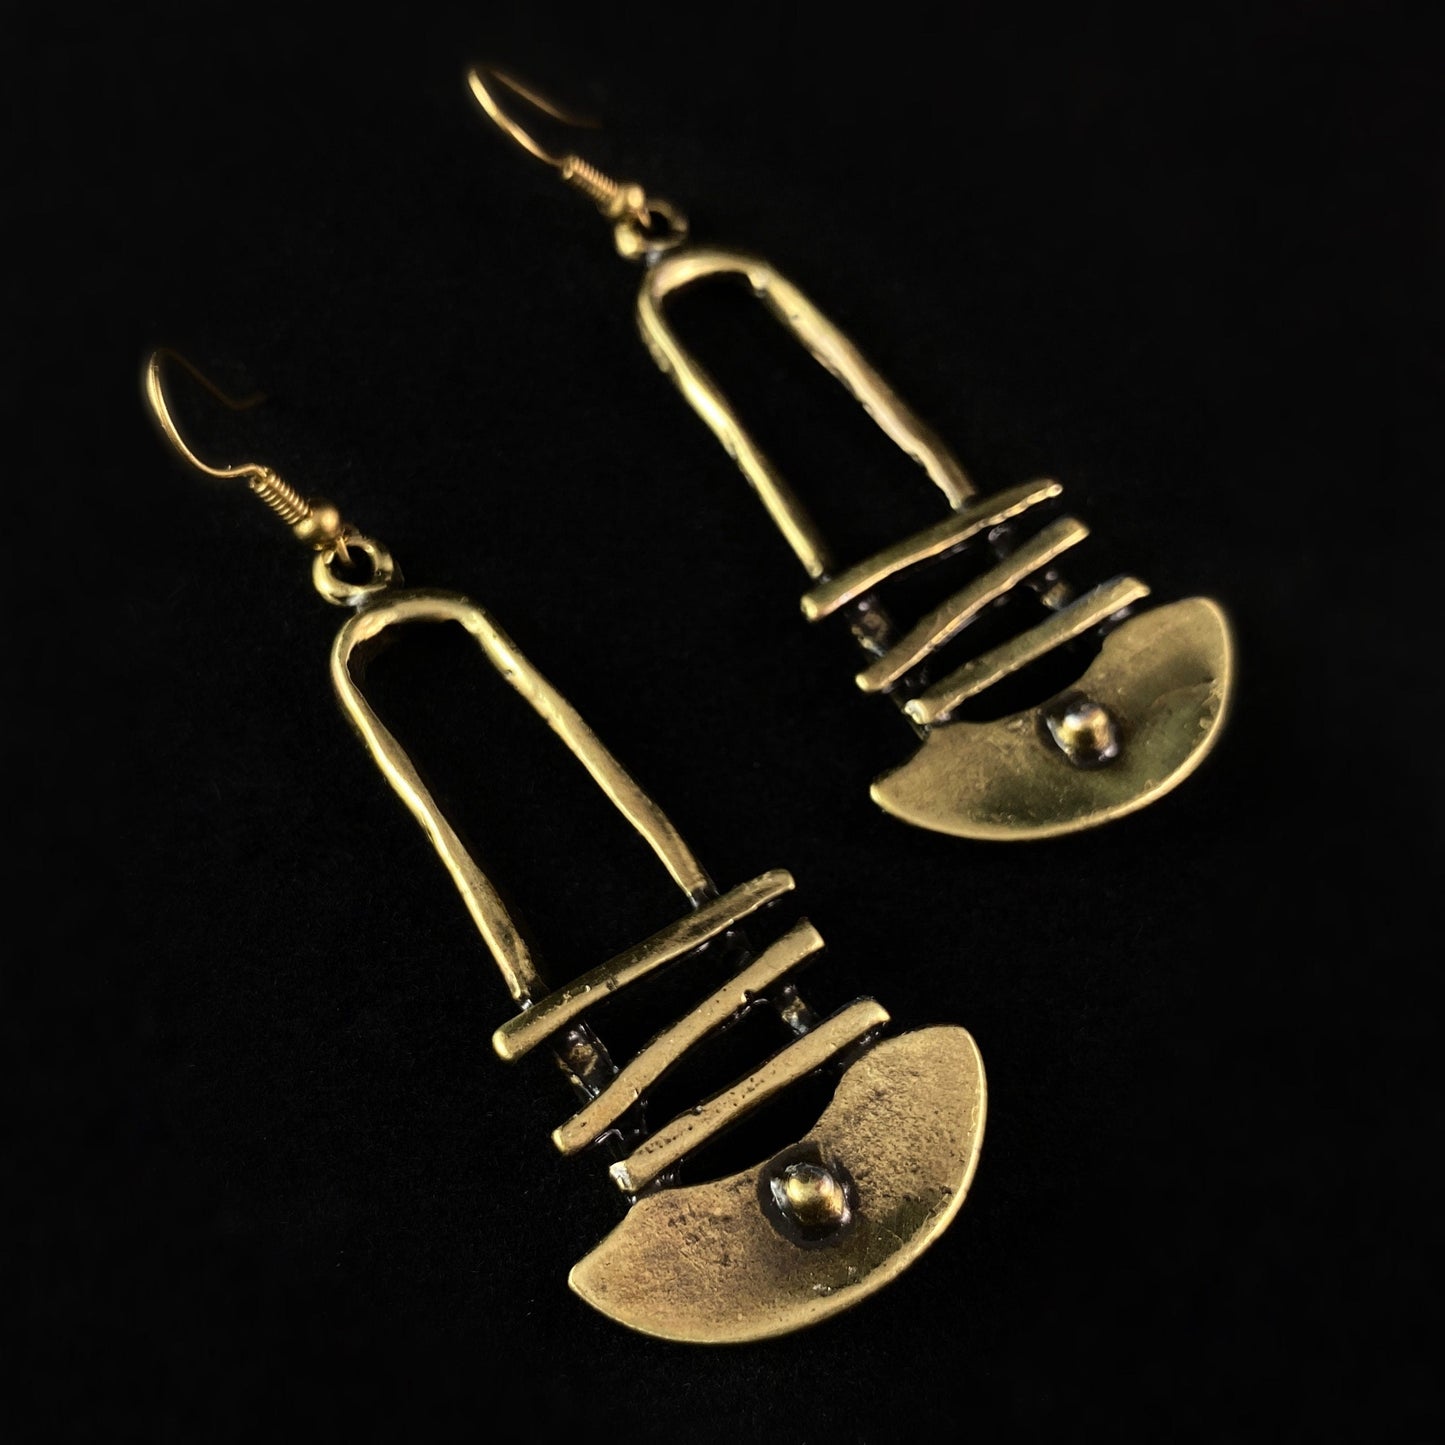 Gold Abstract Ladder Drop Earrings, Handmade, Nickel Free - Elegant Minimalist Jewelry for Women